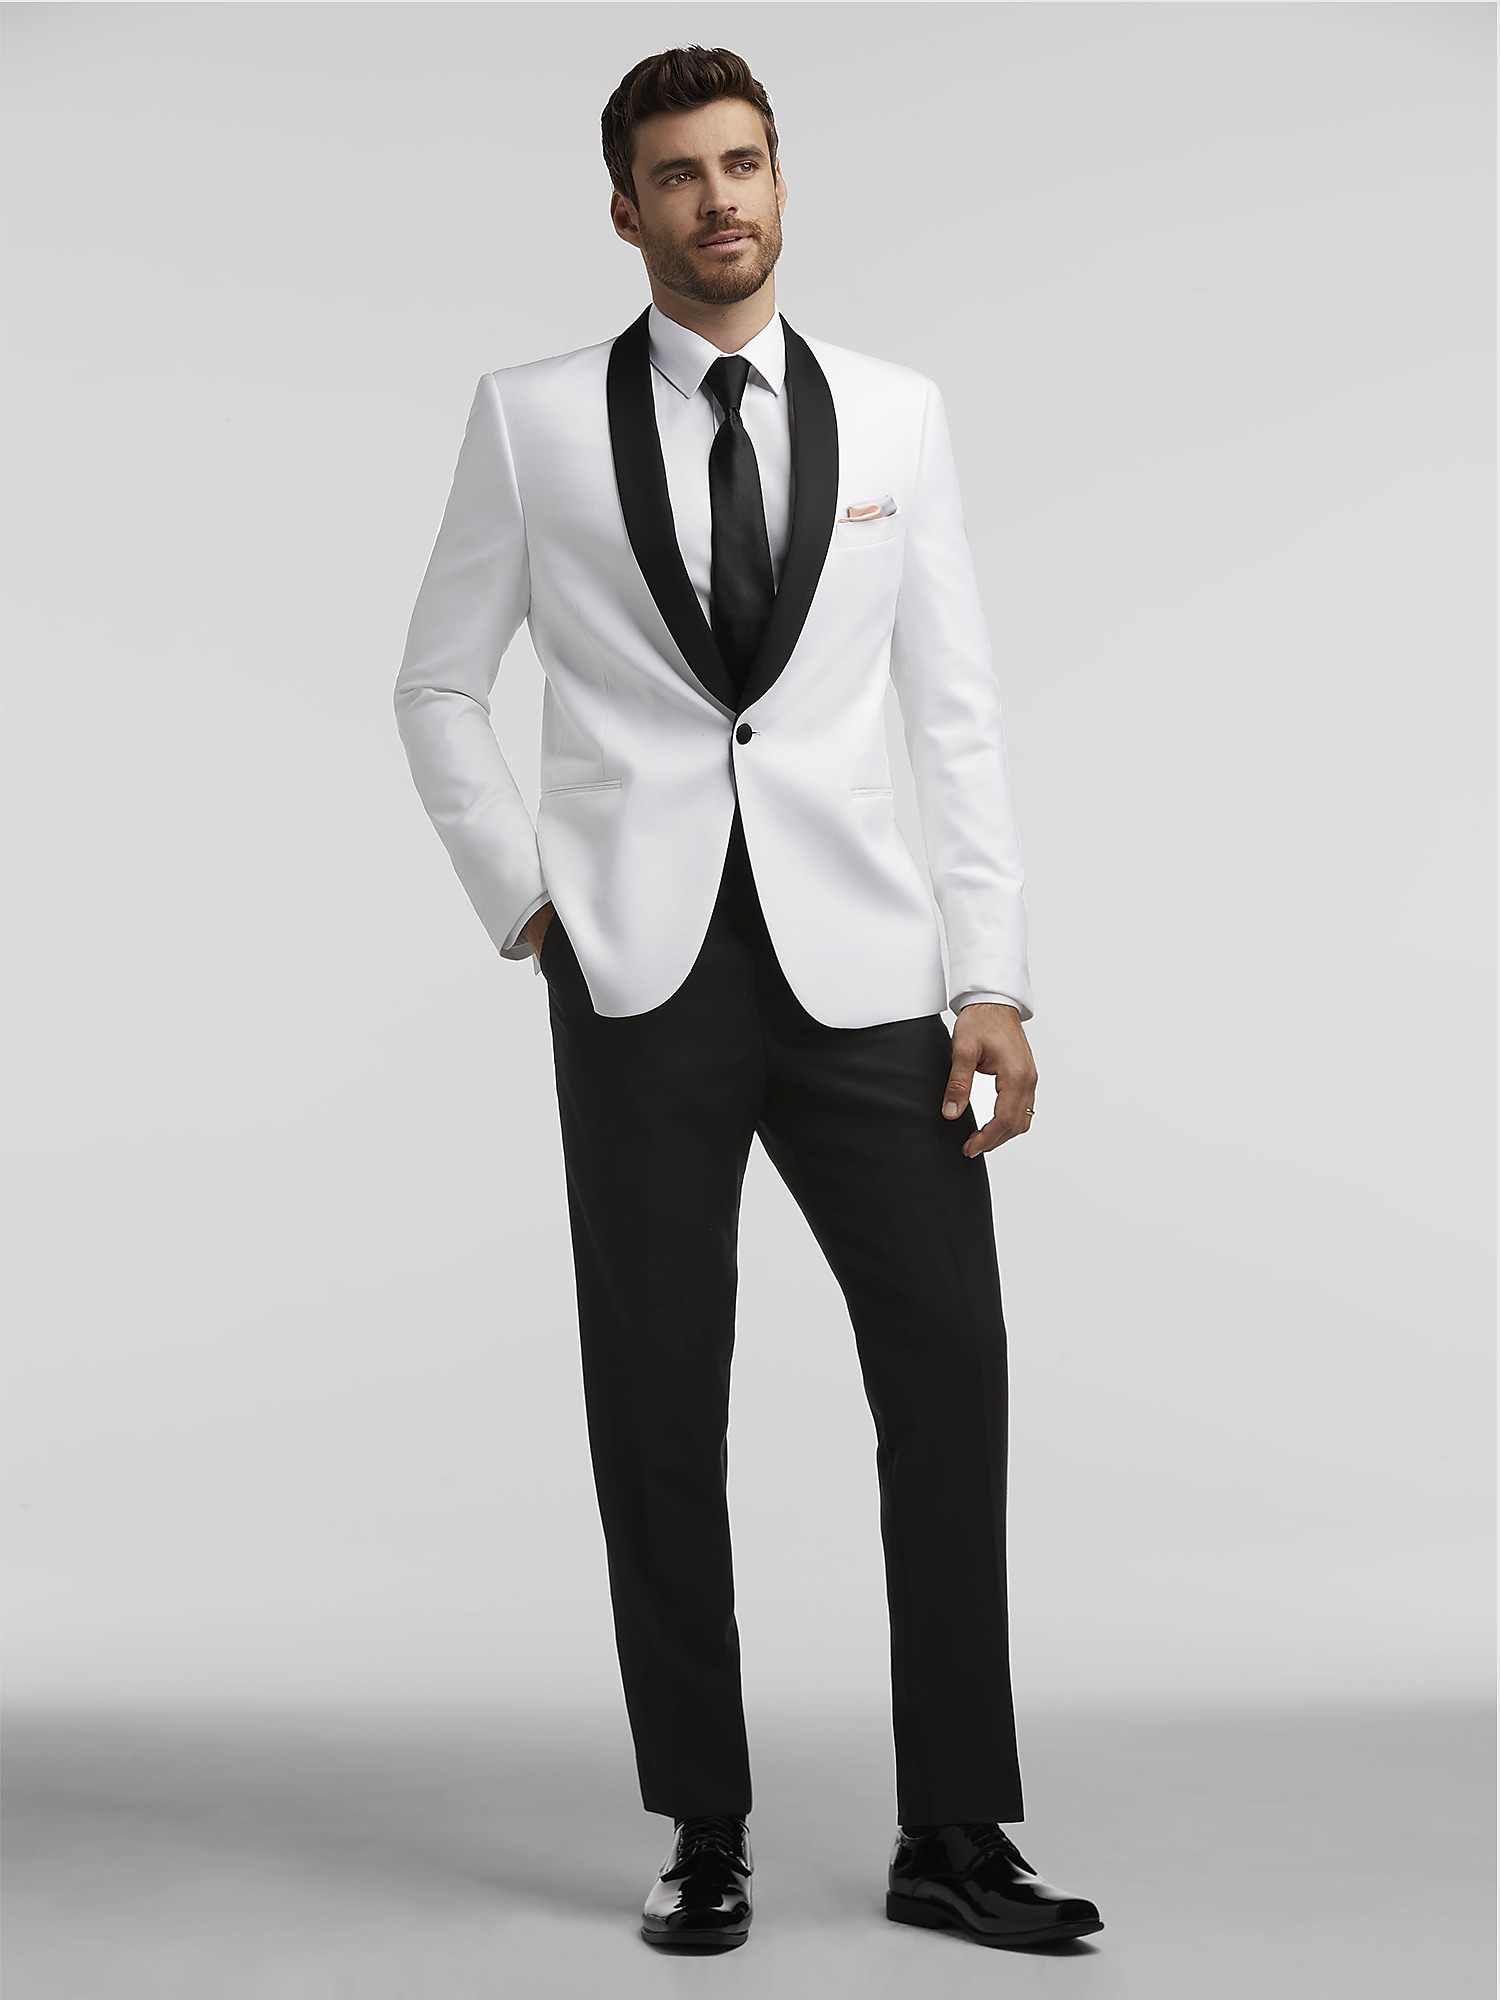 Shuraba tomorrow cushion White Dinner Jacket Tux by Calvin Klein | Tuxedo Rental | Men's Wearhouse